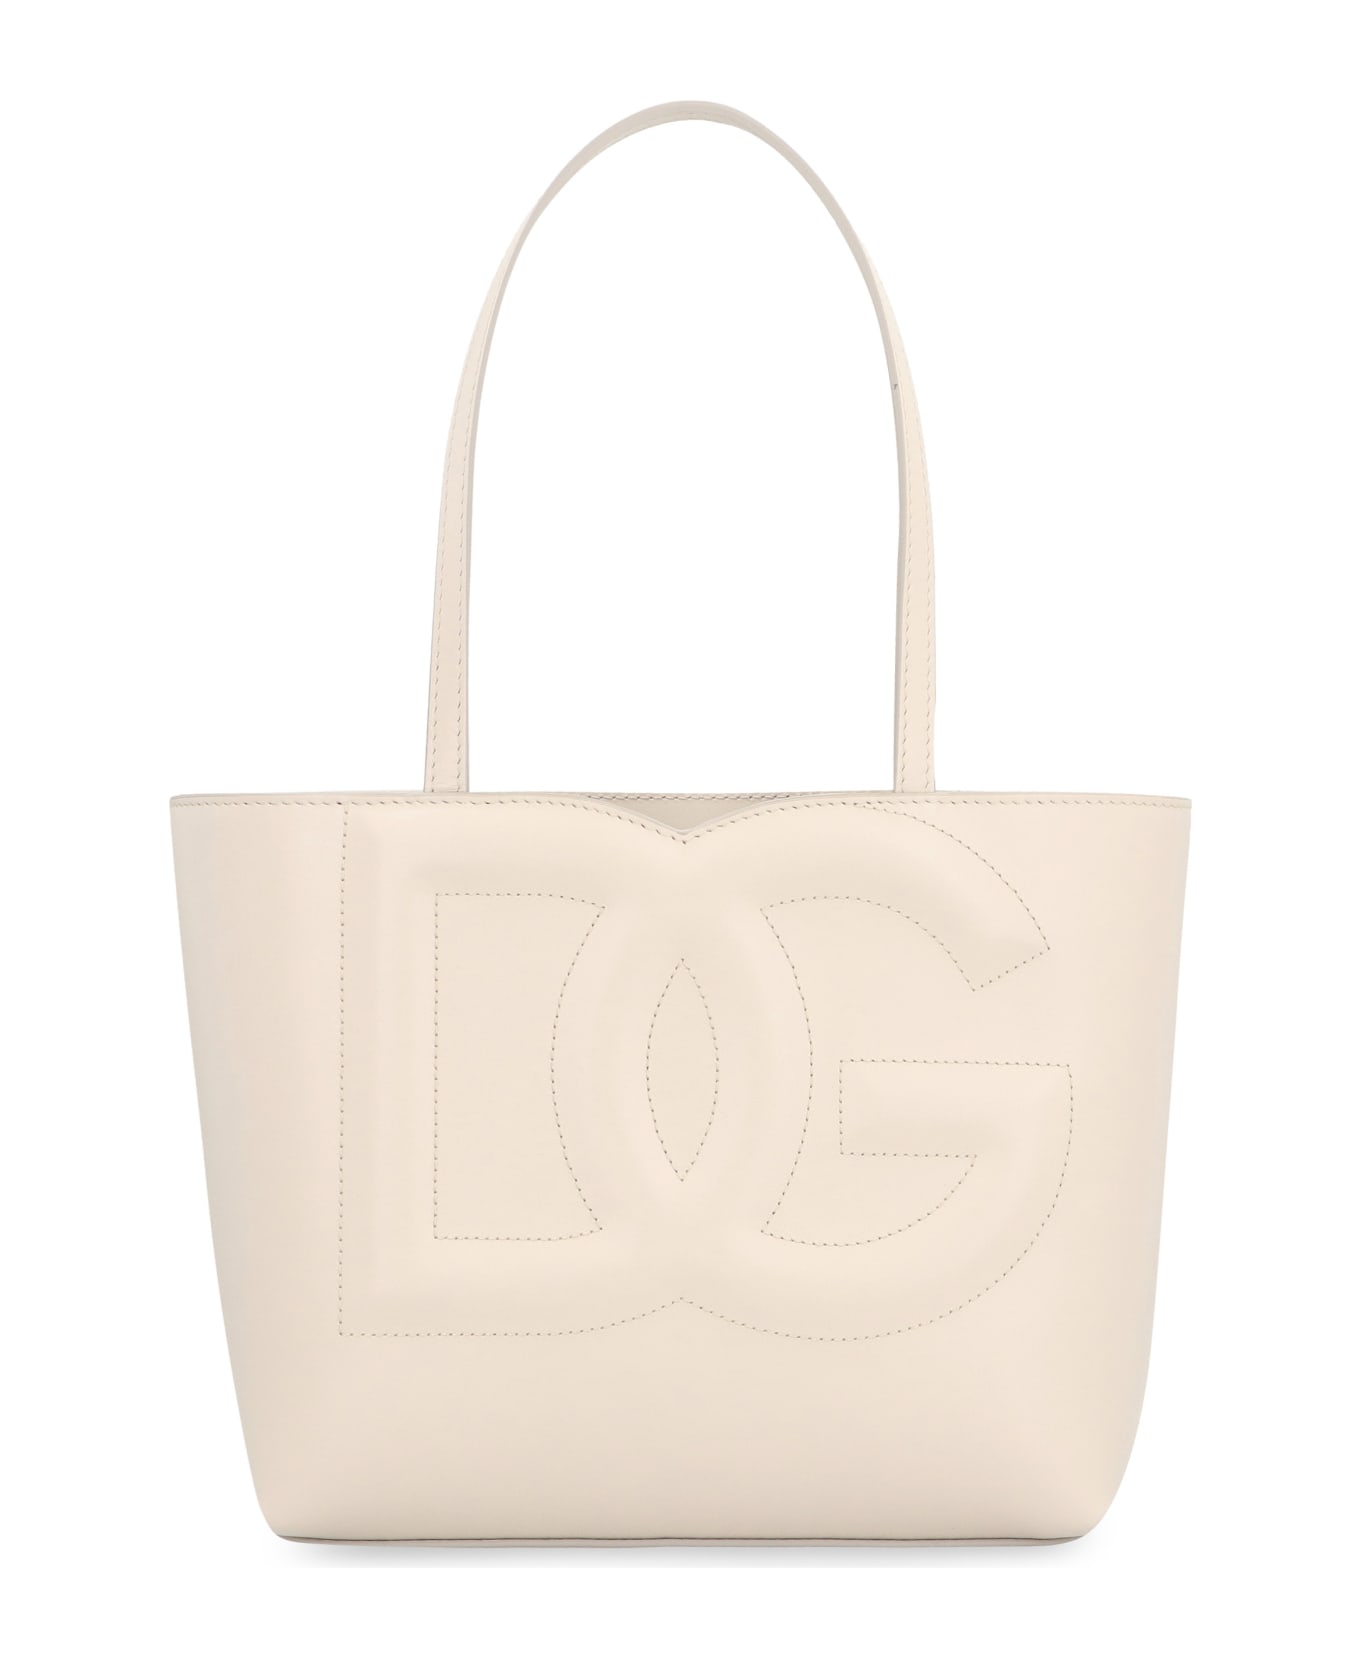 Dolce & Gabbana Logo Leather Tote - Ivory